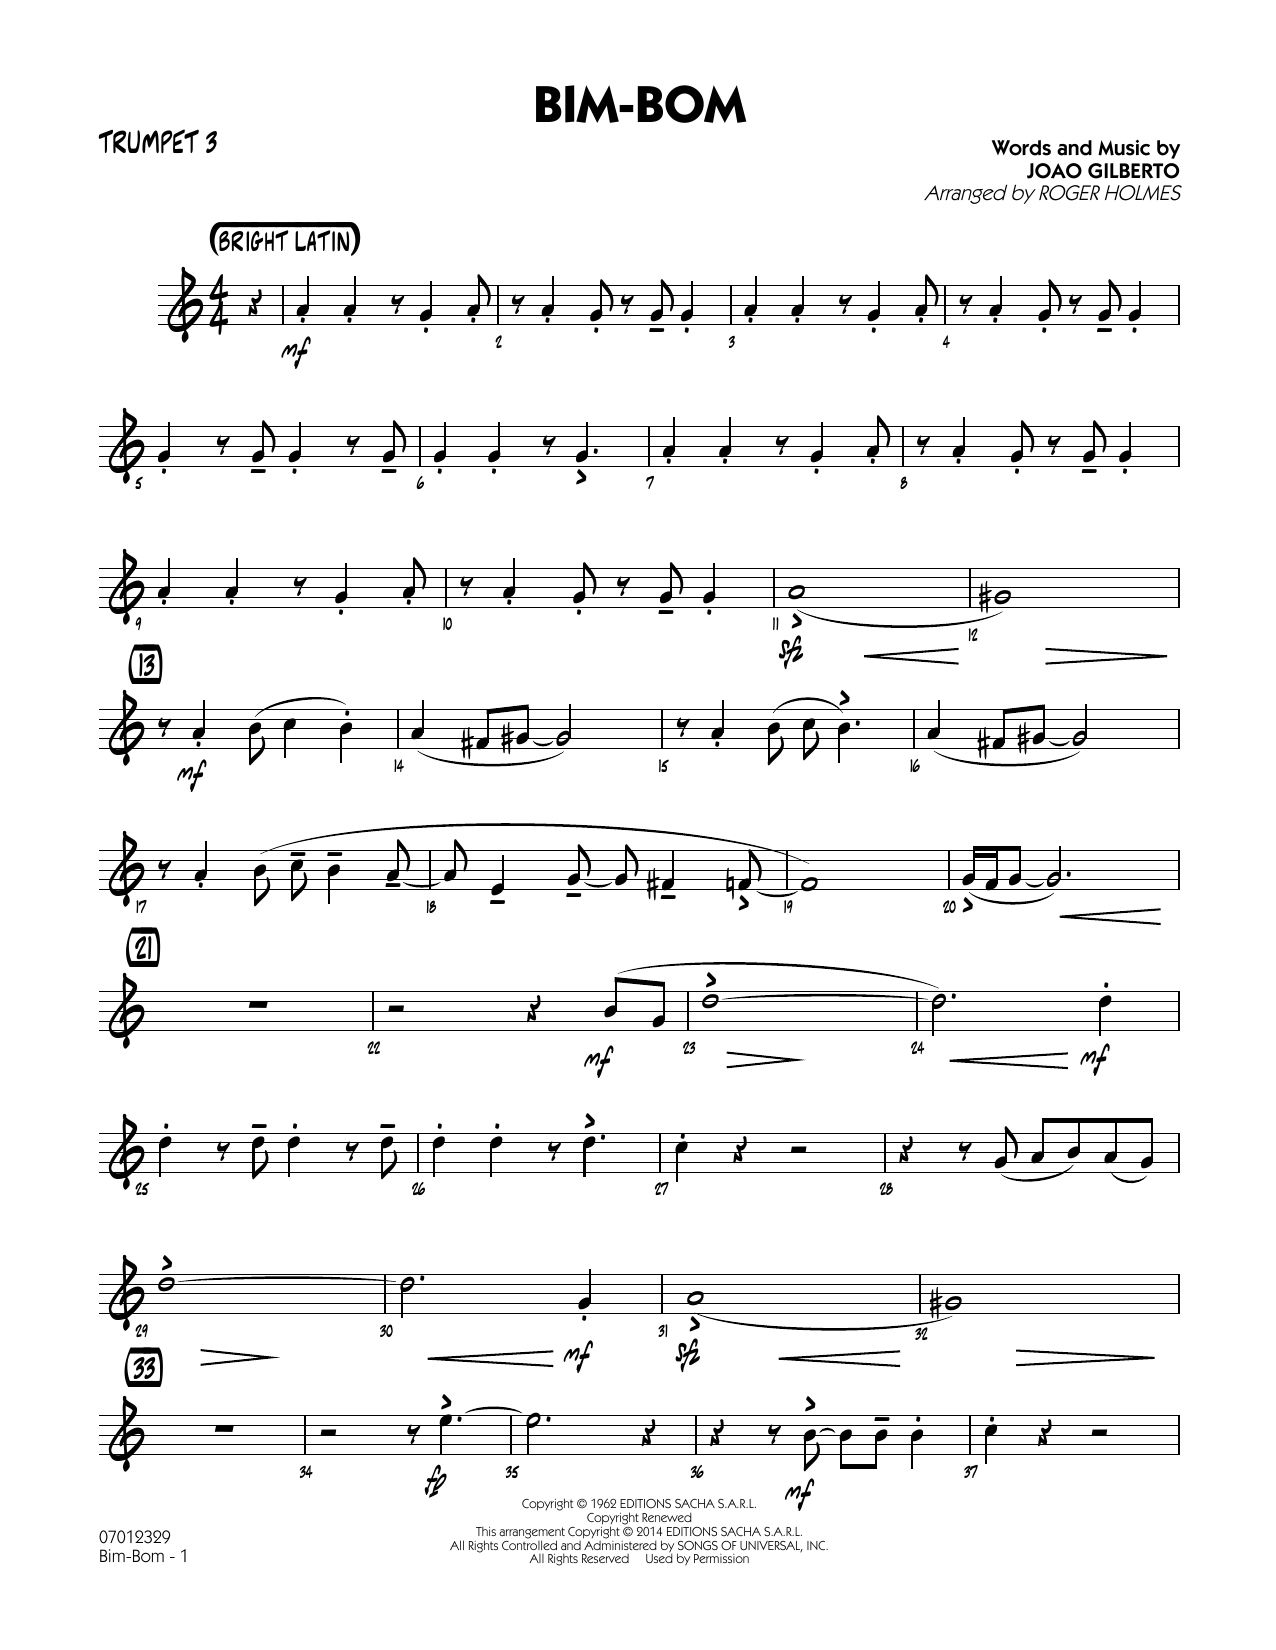 Roger Holmes Bim-Bom - Trumpet 3 sheet music notes and chords. Download Printable PDF.